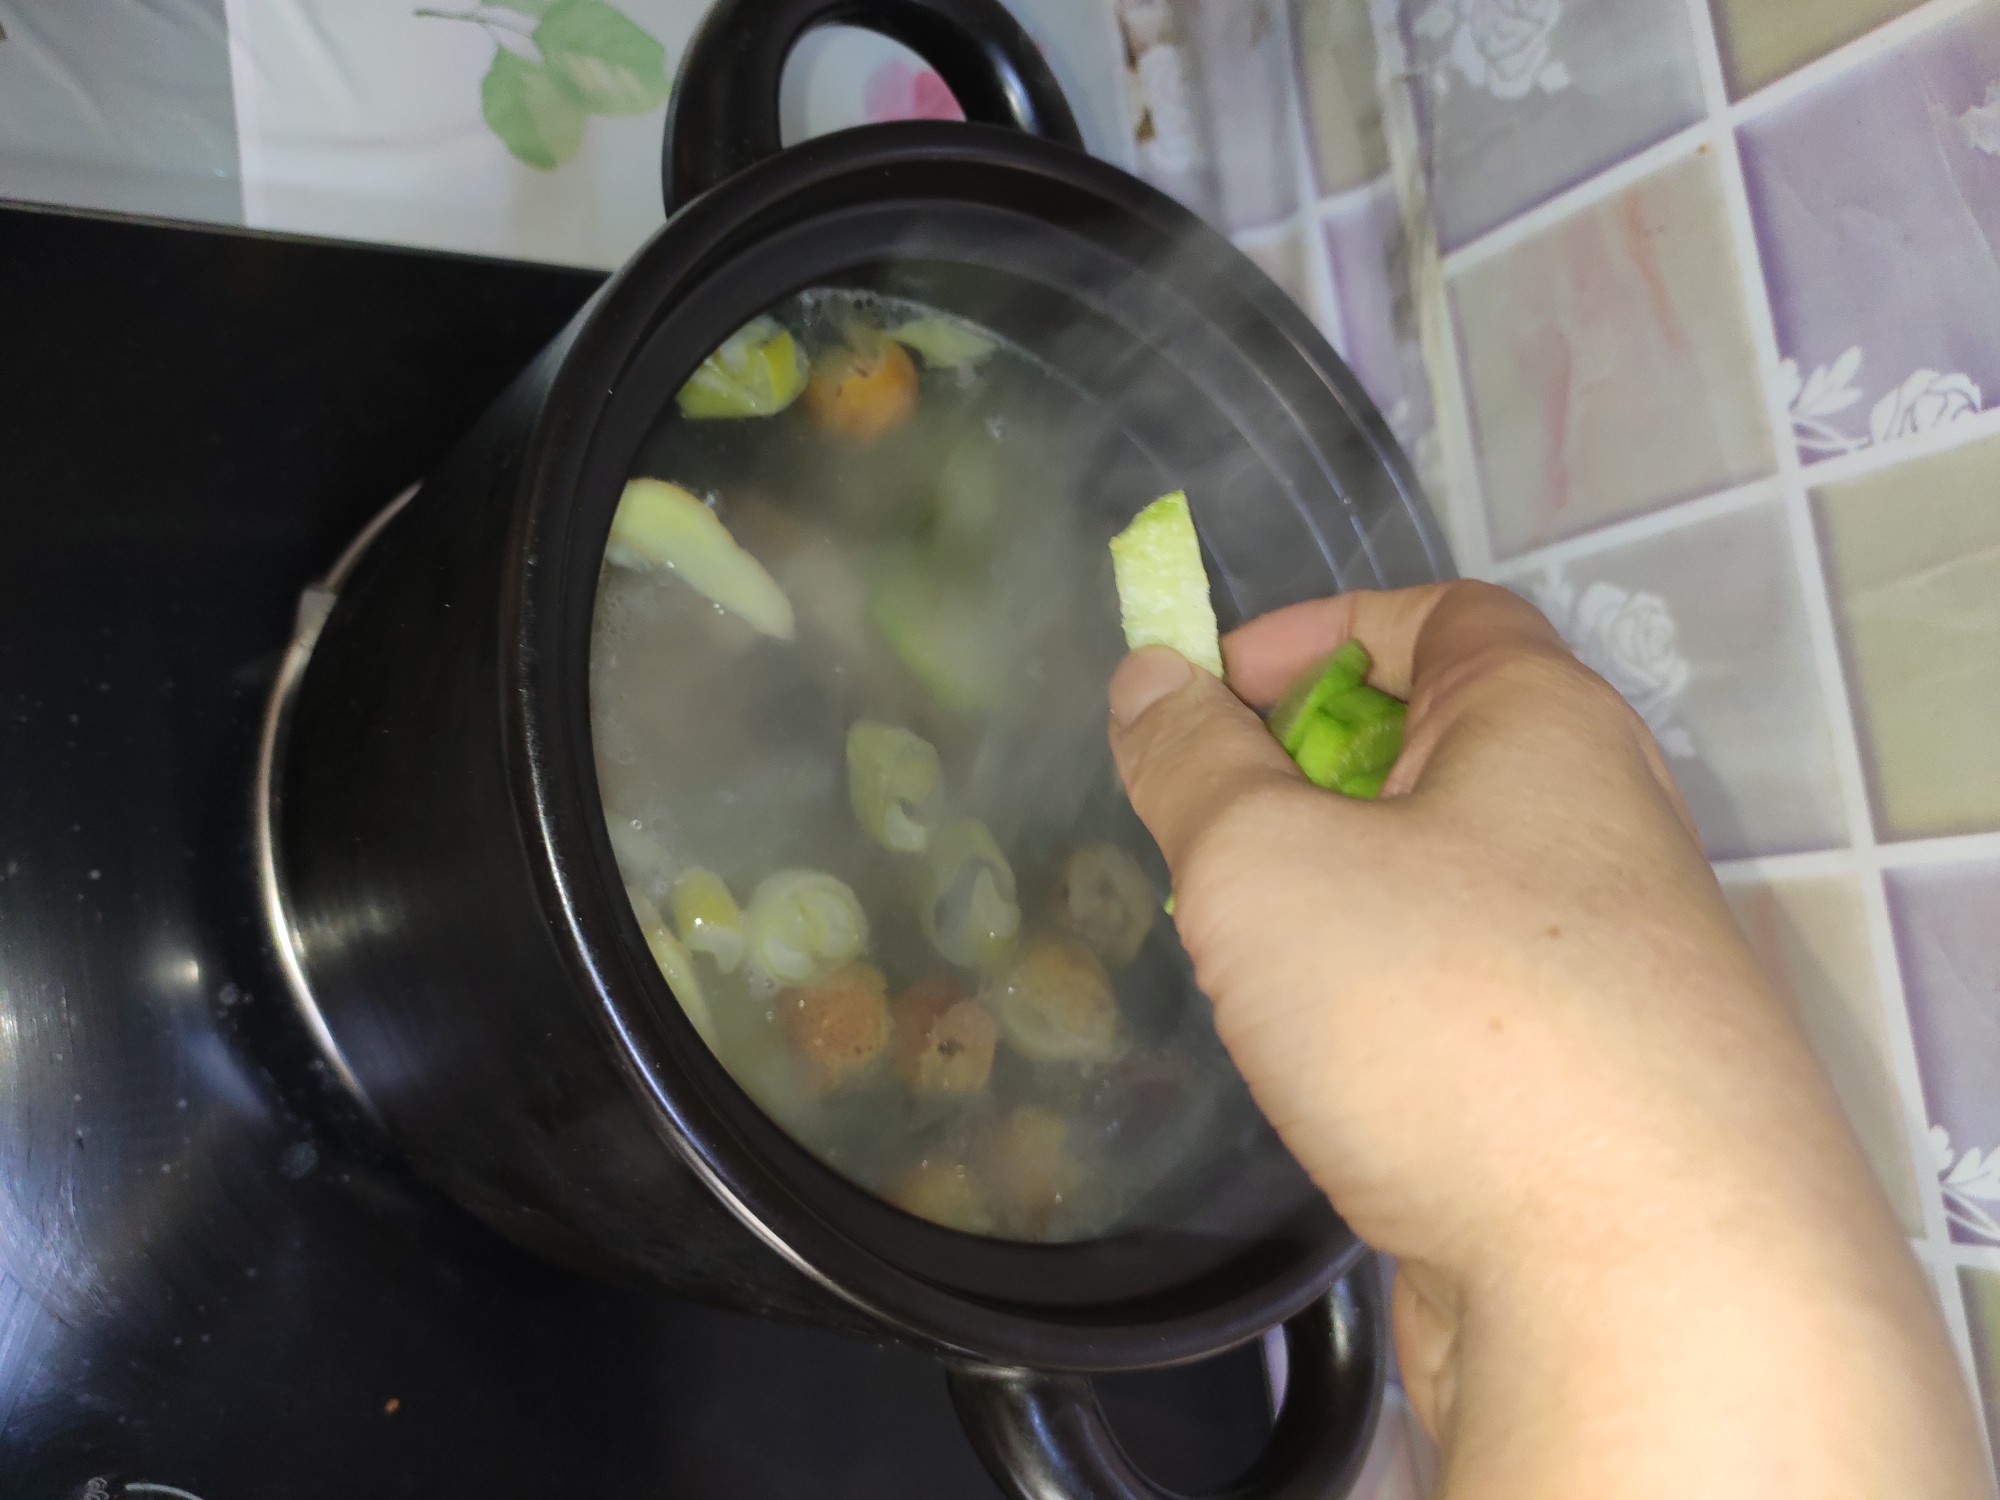 Radish Pork Ribs Soup recipe